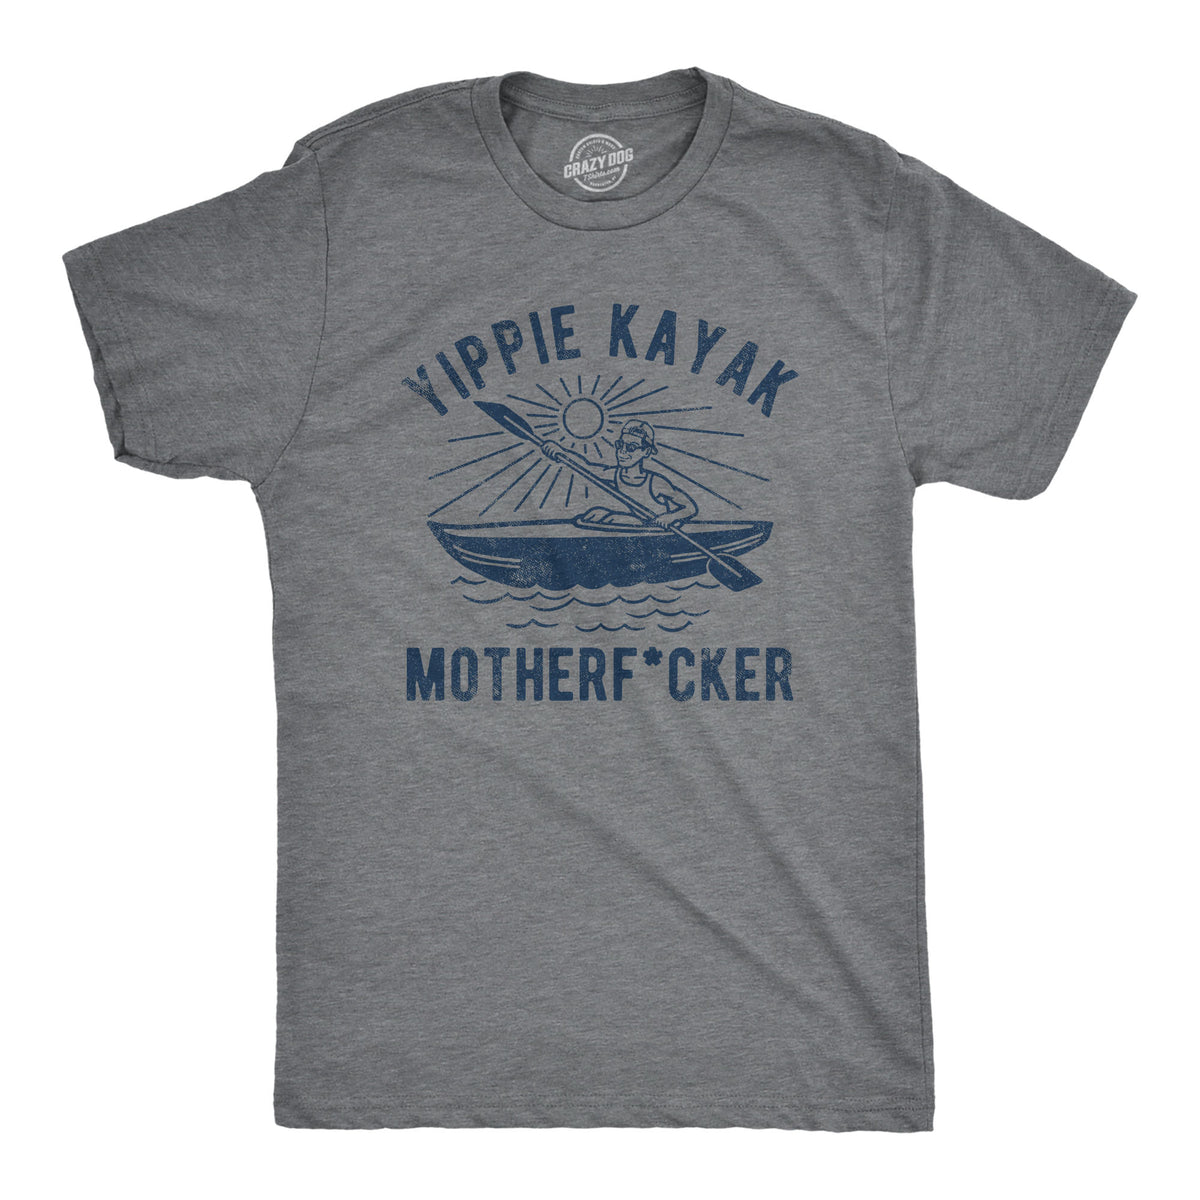 Funny Dark Heather Grey - KAYAK Yippie Kayak Mother Fucker Mens T Shirt Nerdy Sarcastic Tee